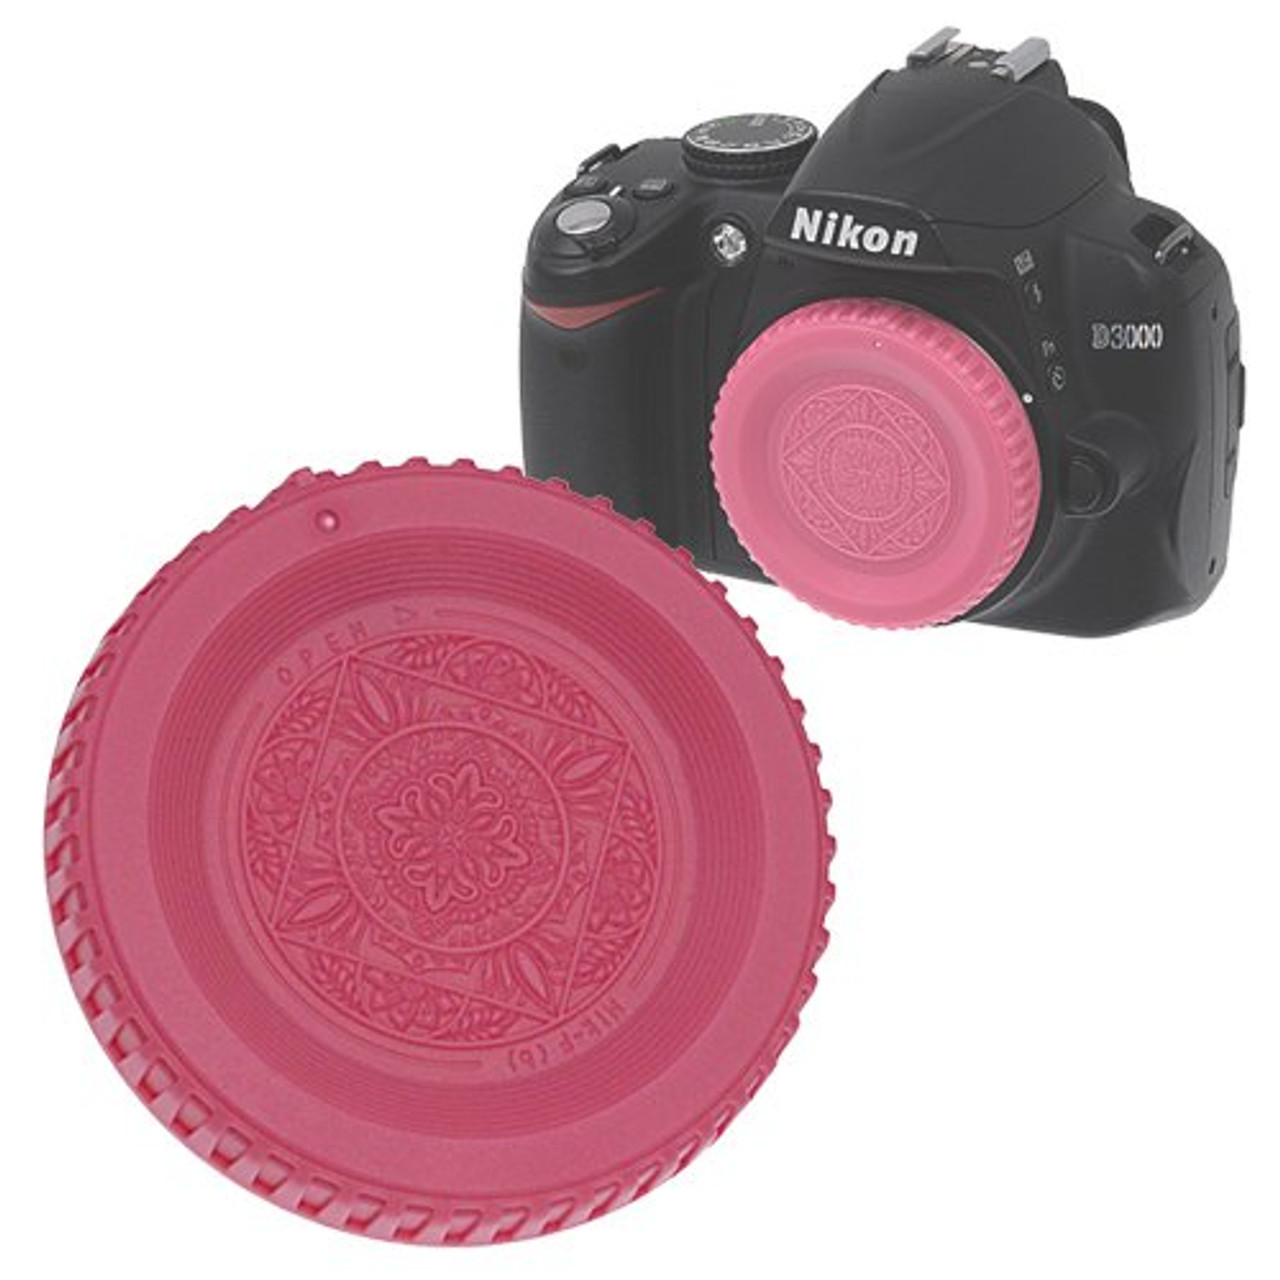 pink dslr camera